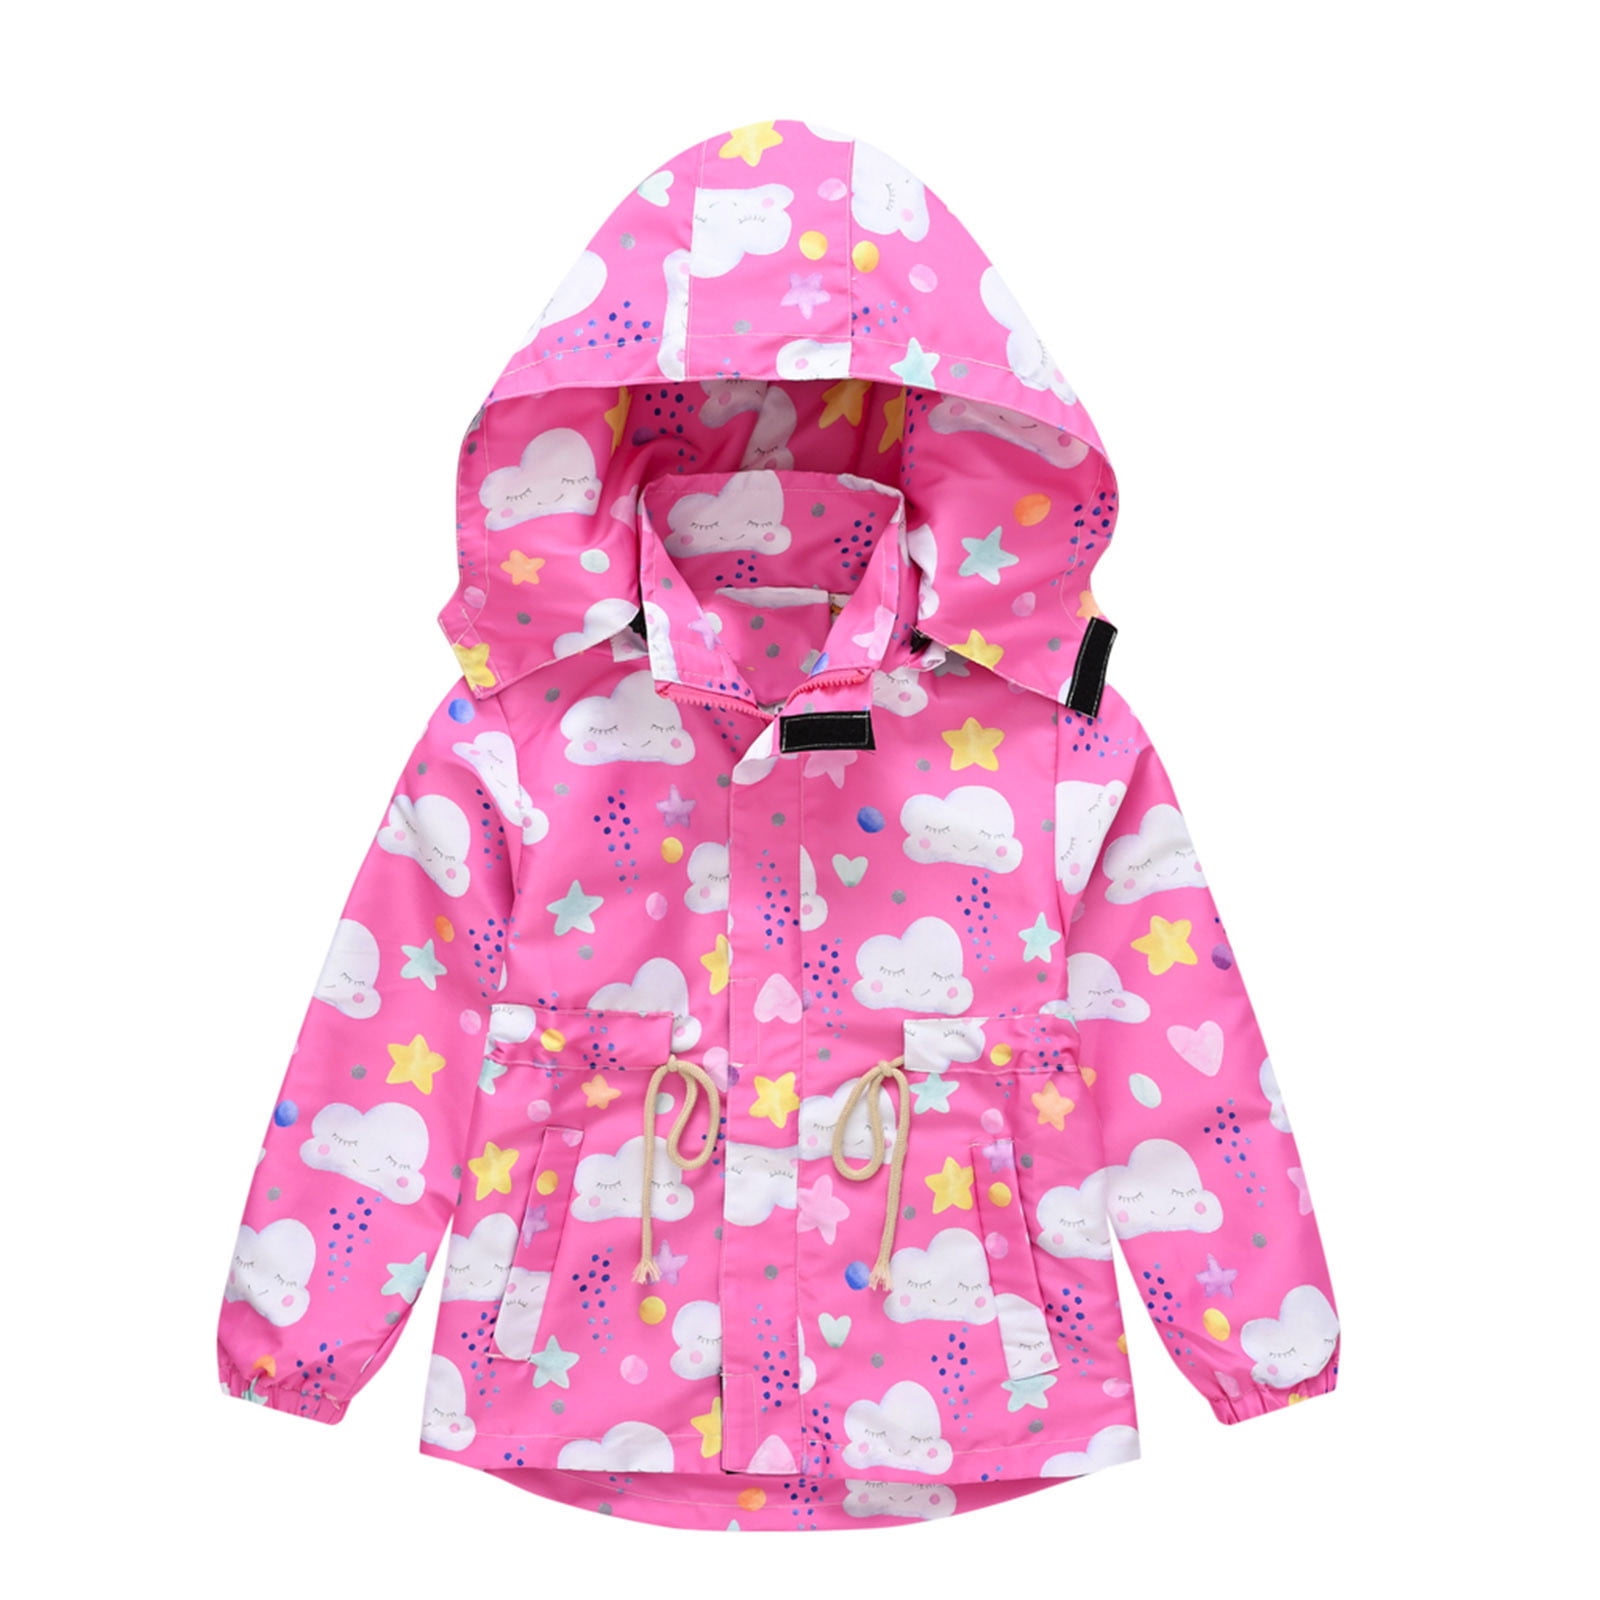 Gubotare Coat For Kids Boys Girls Lightweight Breathable Raincoat  Waterproof Hooded Rain Jacket Windbreaker Easy to Fold,Hot Pink 7-8 Years -  Walmart.com